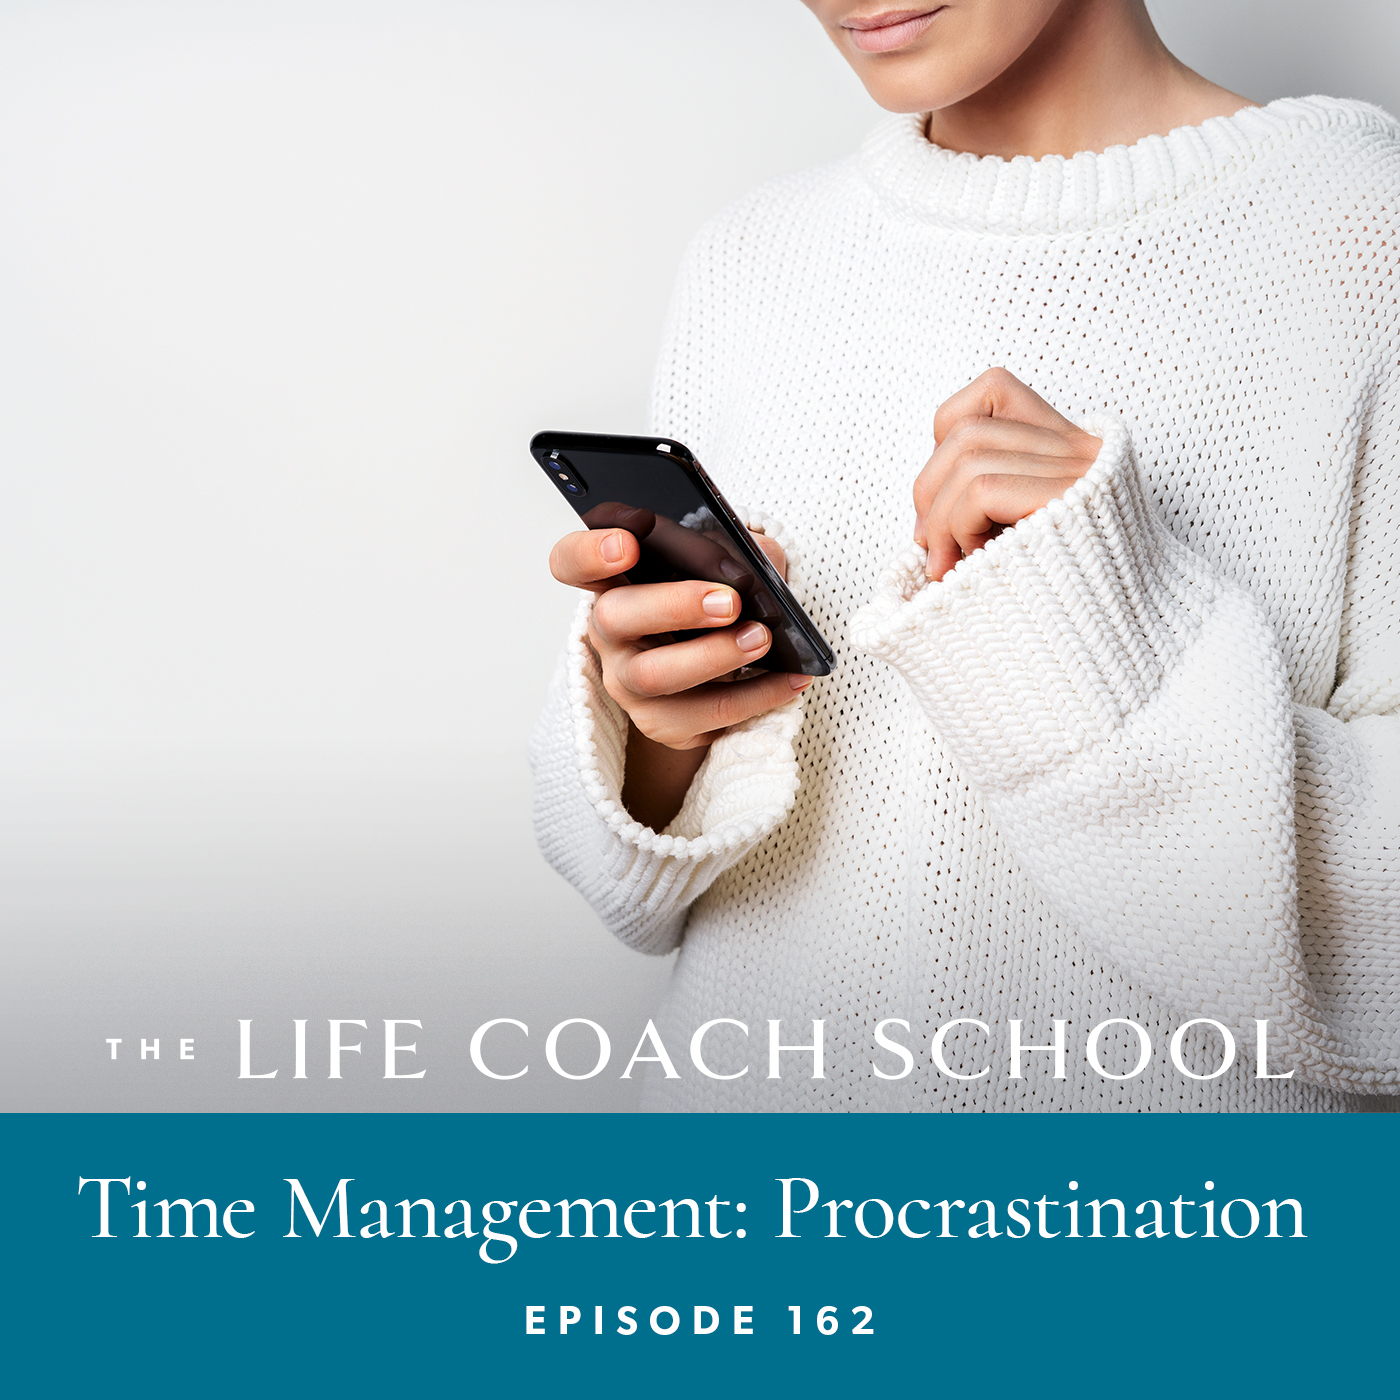 The Life Coach School Podcast with Brooke Castillo | Episode 162 | Time Management – Procrastination